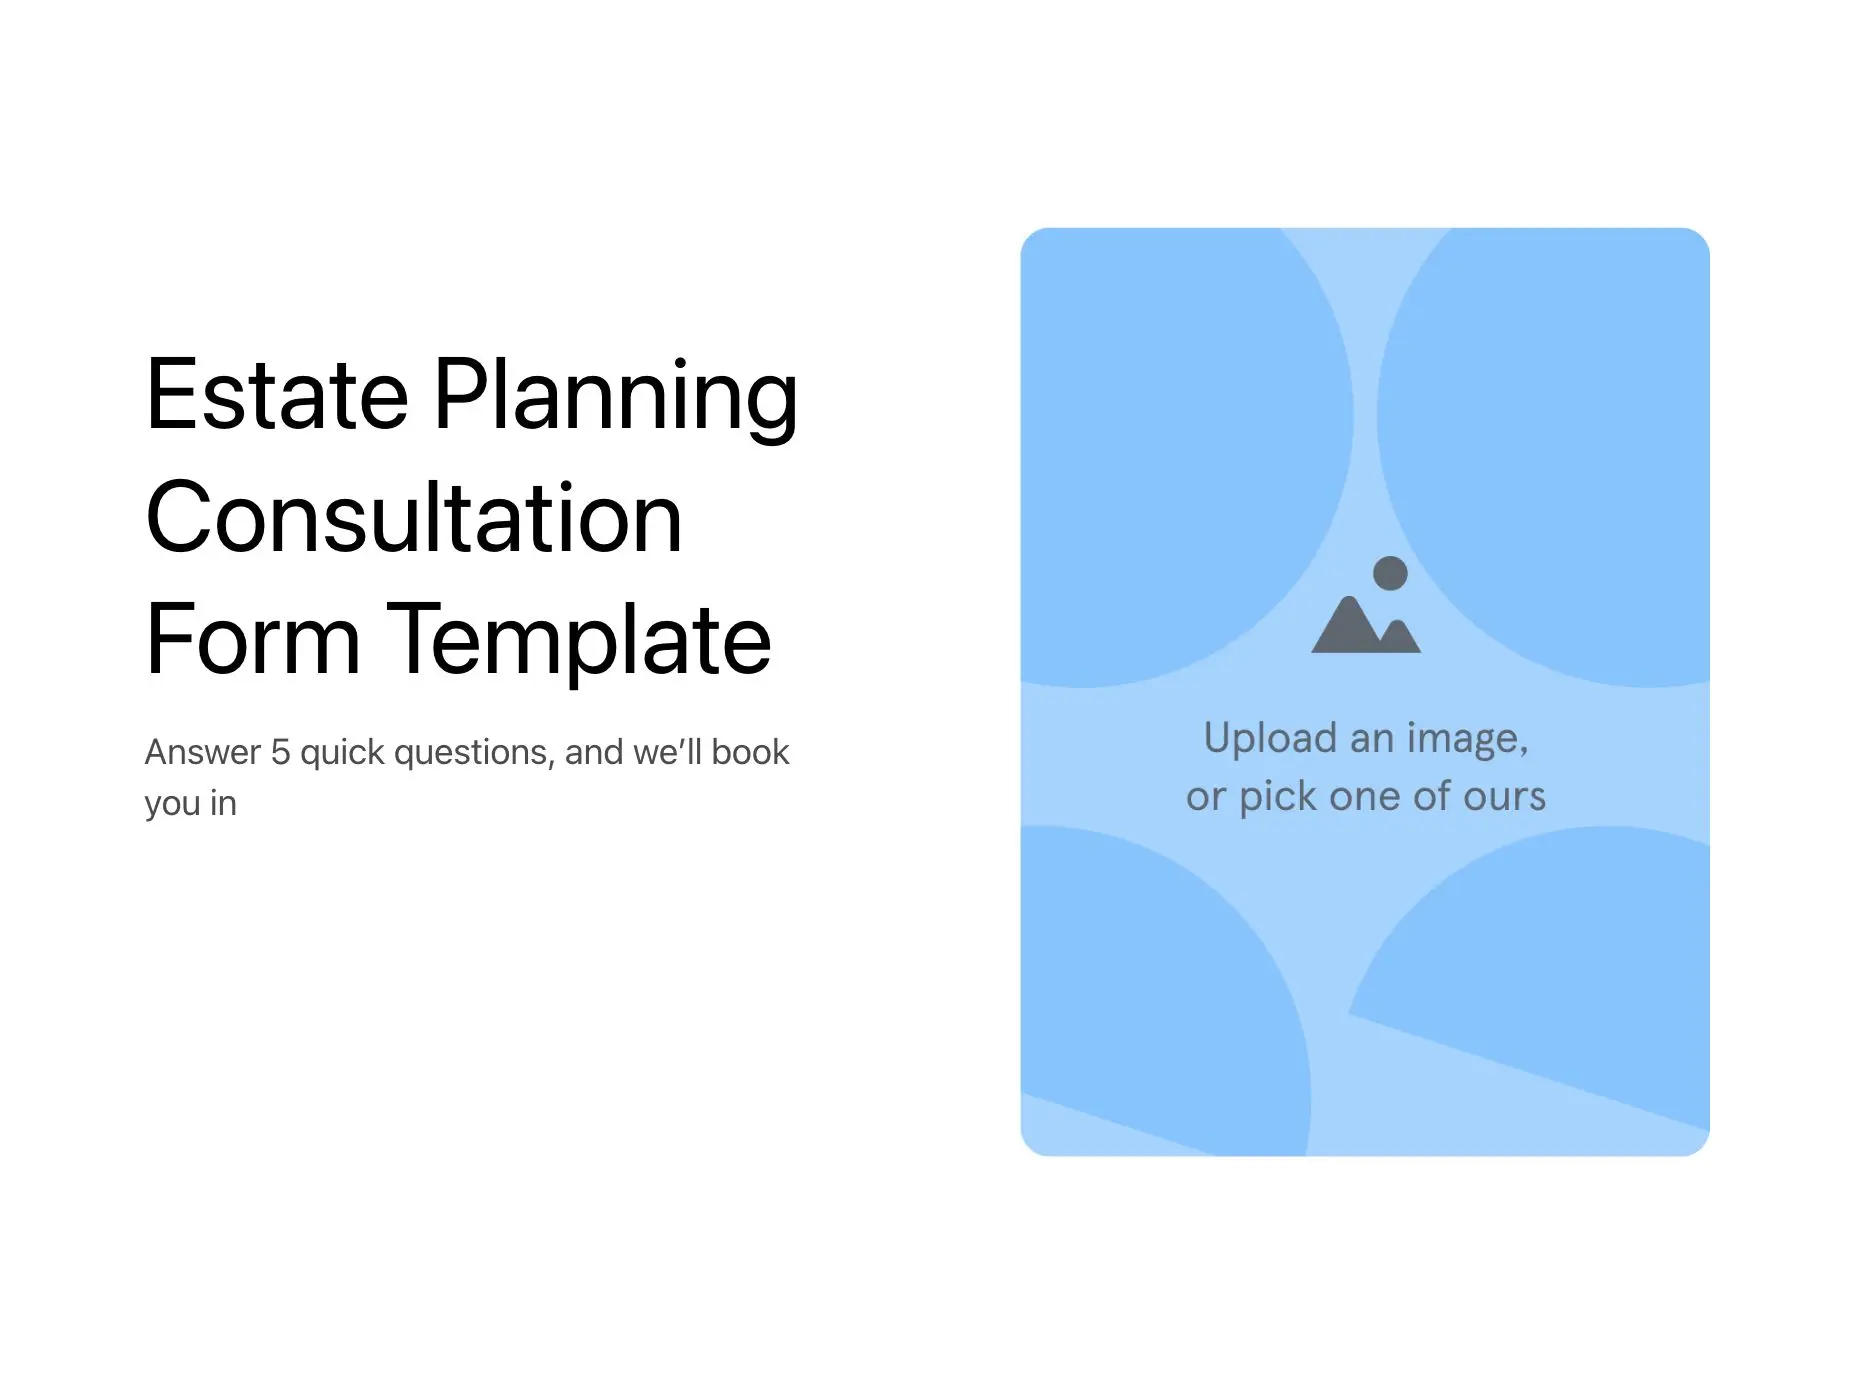 Estate Planning Consultation Form Template Hero